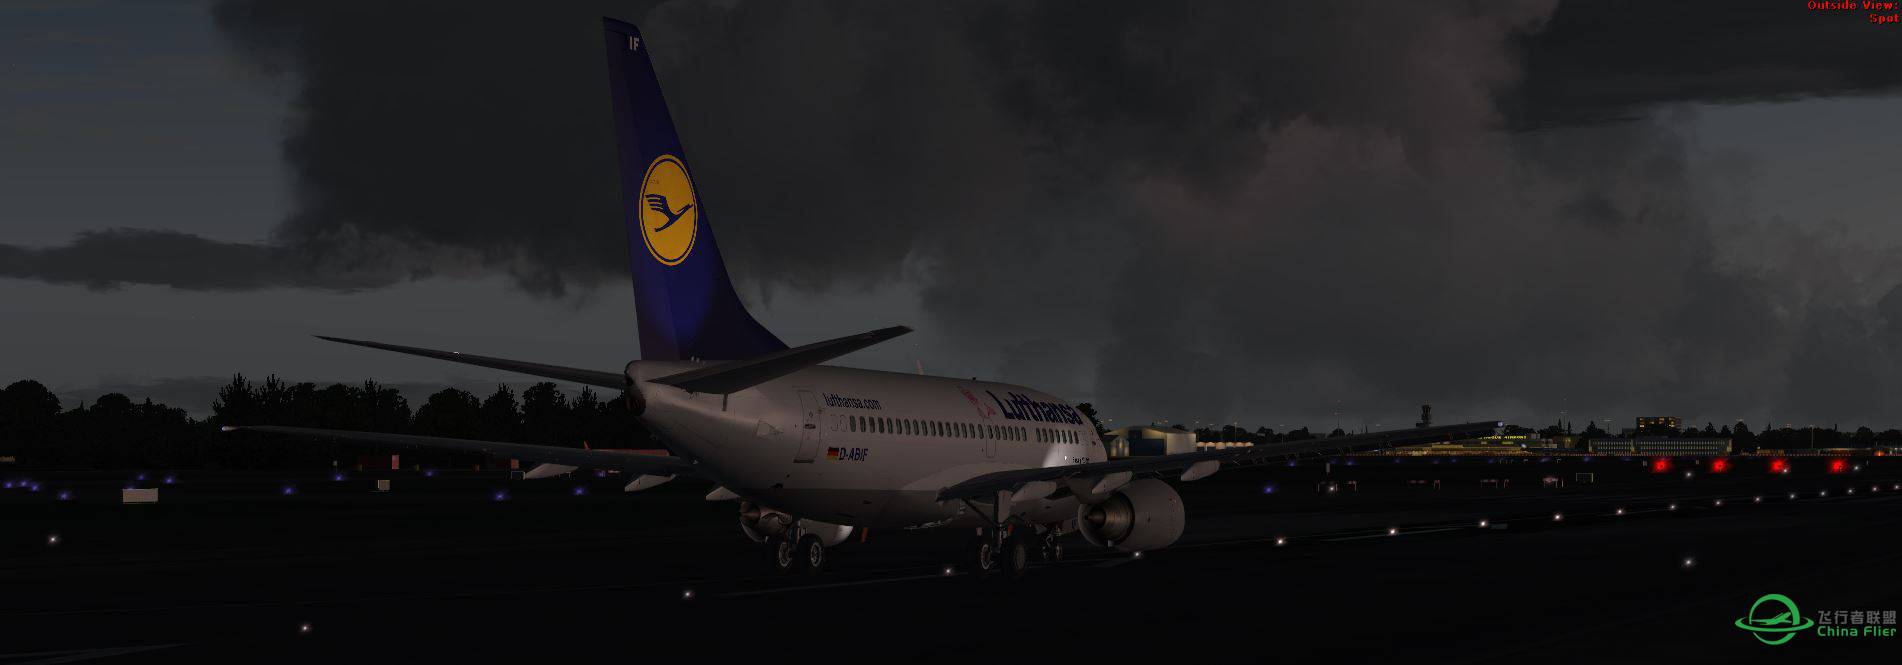 B737 Lufthansa-5686 